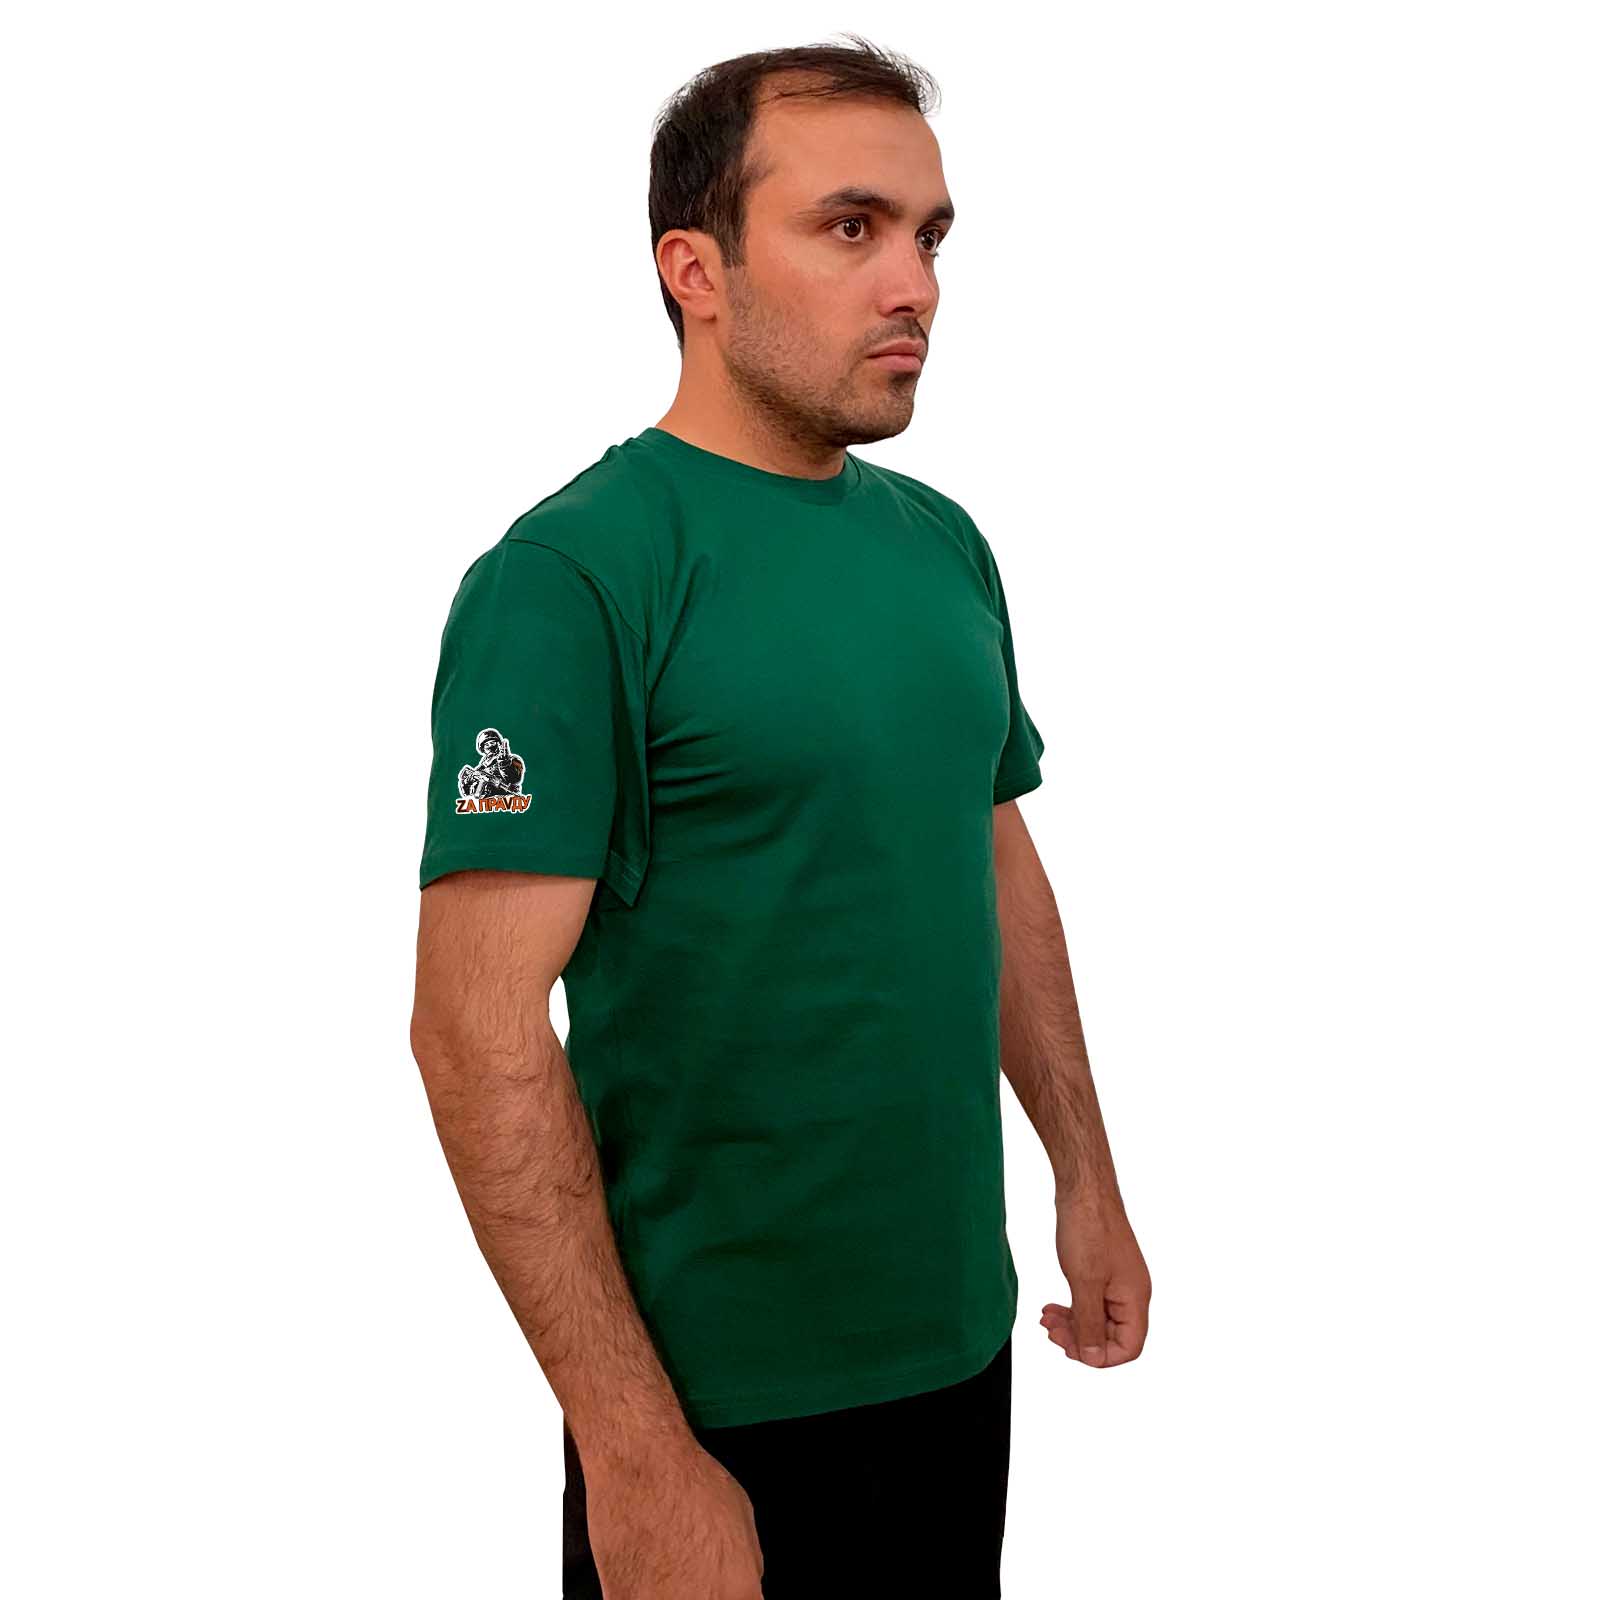 Зелёная футболка с термоаппликацией "Zа праVду" на рукаве